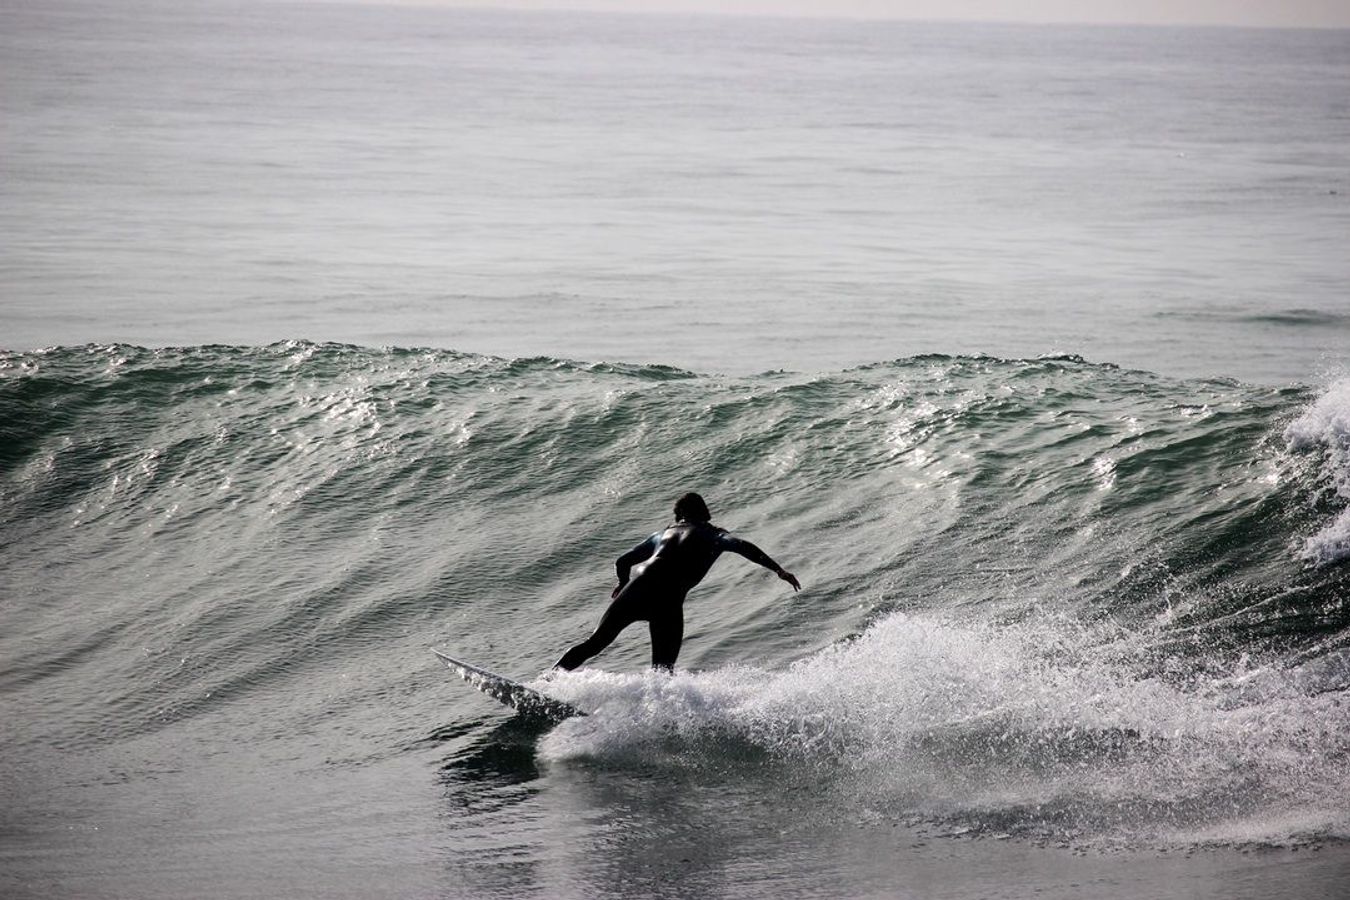 Surfing the Silver Tsunami